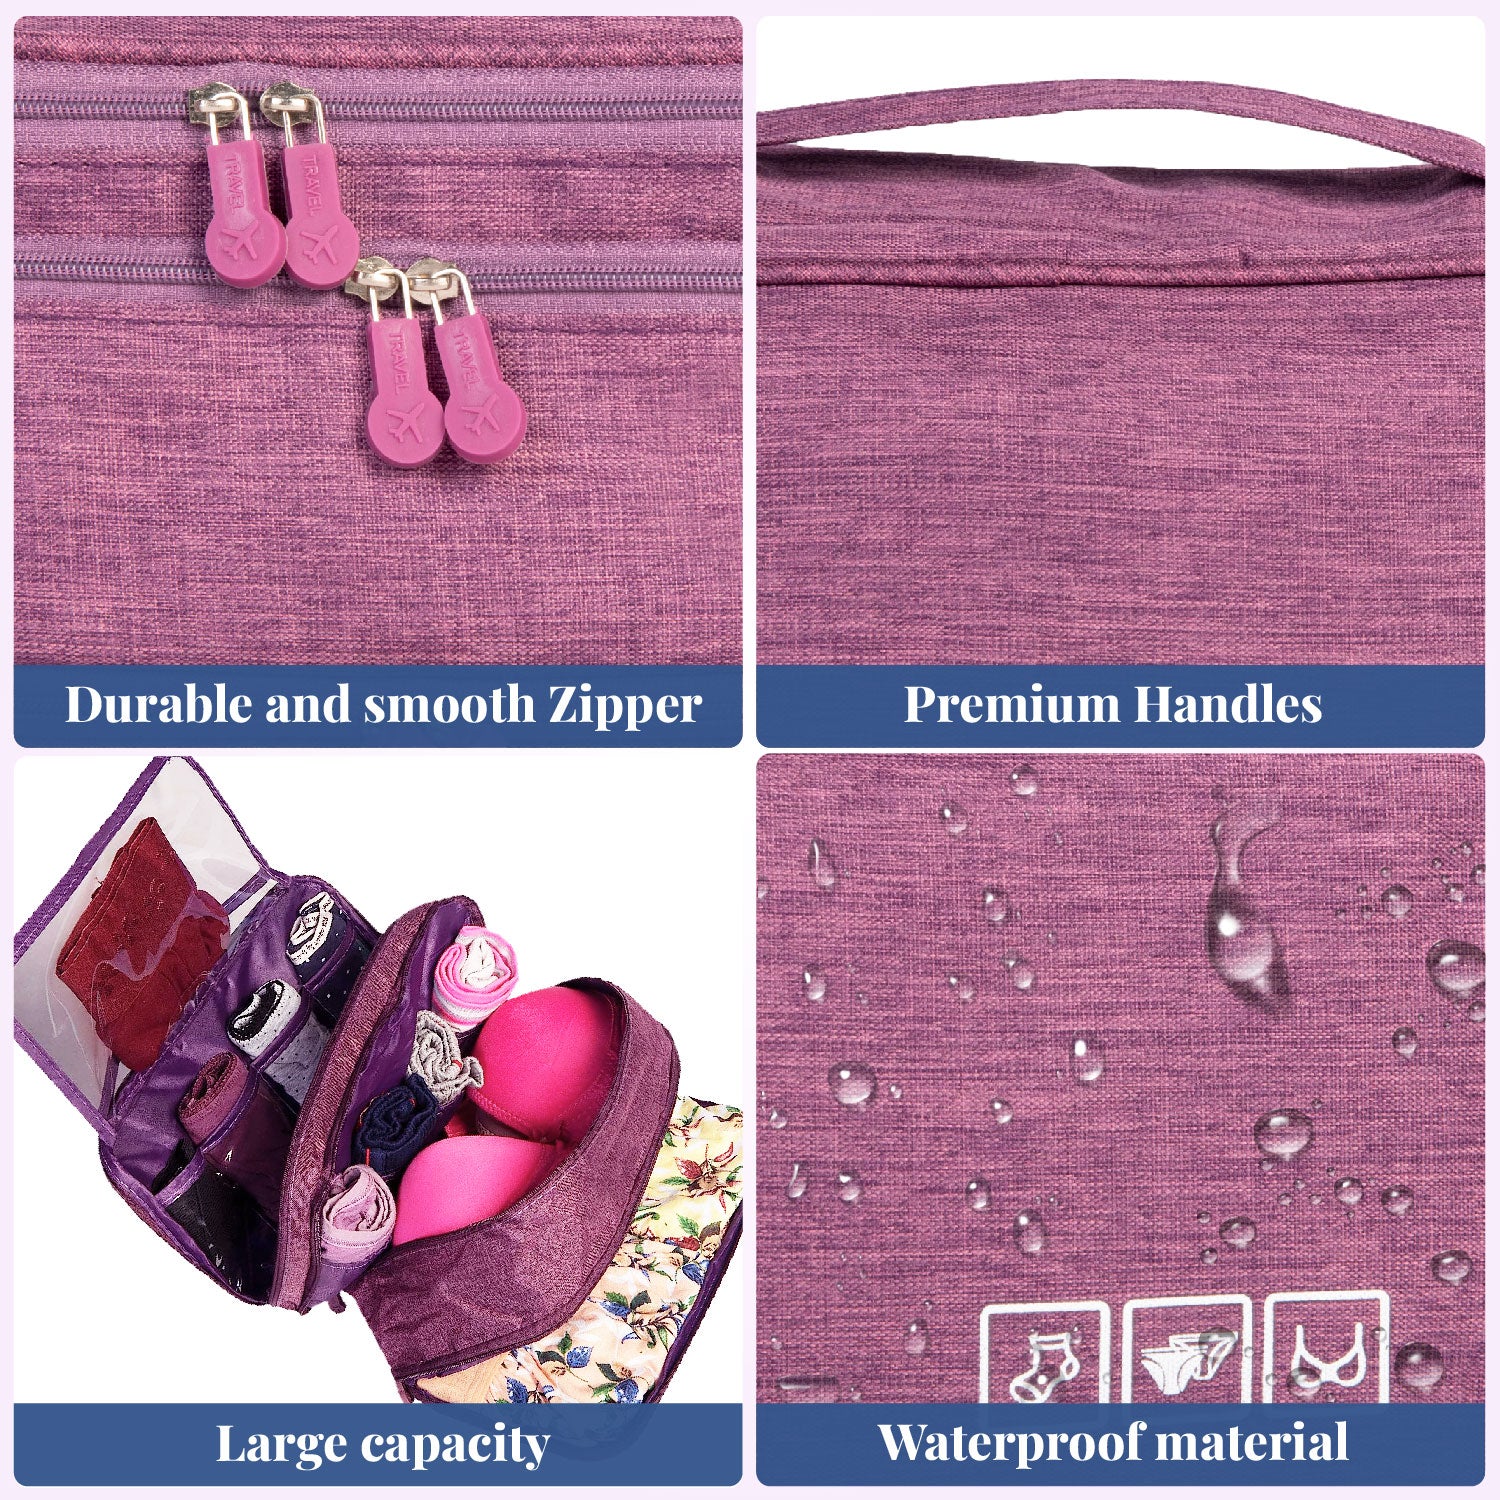 Portable Underwear Bra Storage Bag Waterproof Travel Toiletry Organizer,Purple